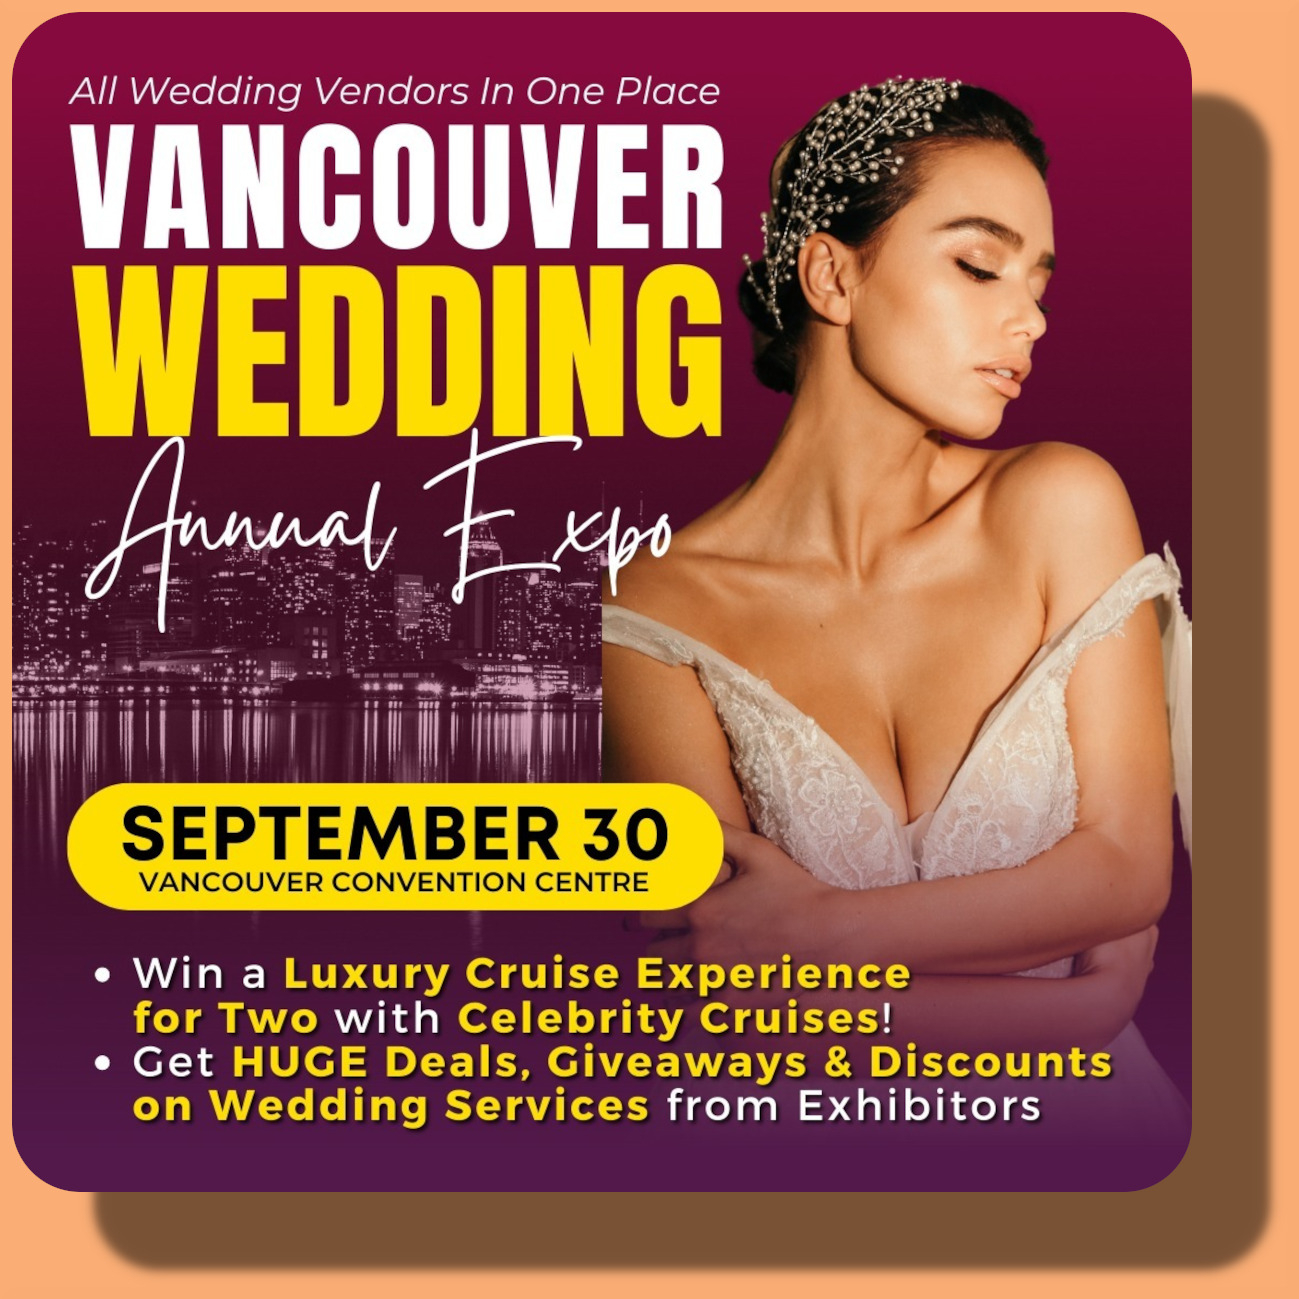 𝐕𝐚𝐧𝐜𝐨𝐮𝐯𝐞𝐫 𝐖𝐞𝐝𝐝𝐢𝐧𝐠 𝐄𝐱𝐩𝐨 - September 30, Vancouver Convention Centre